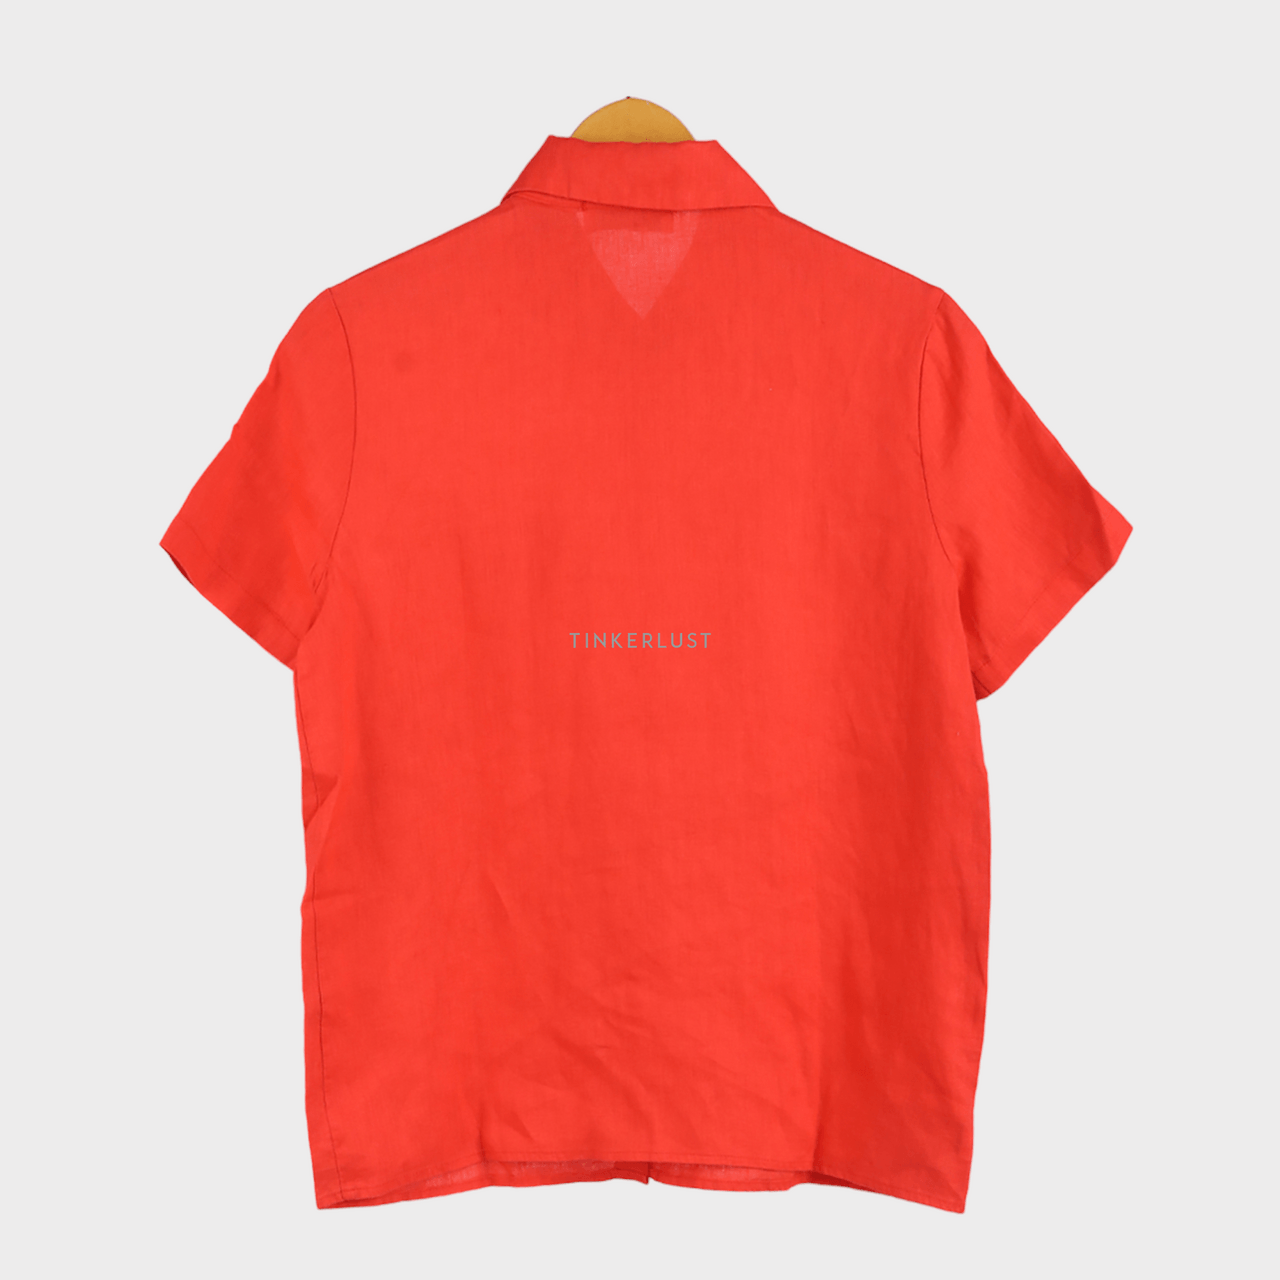 Mix & Max Orange Shirt